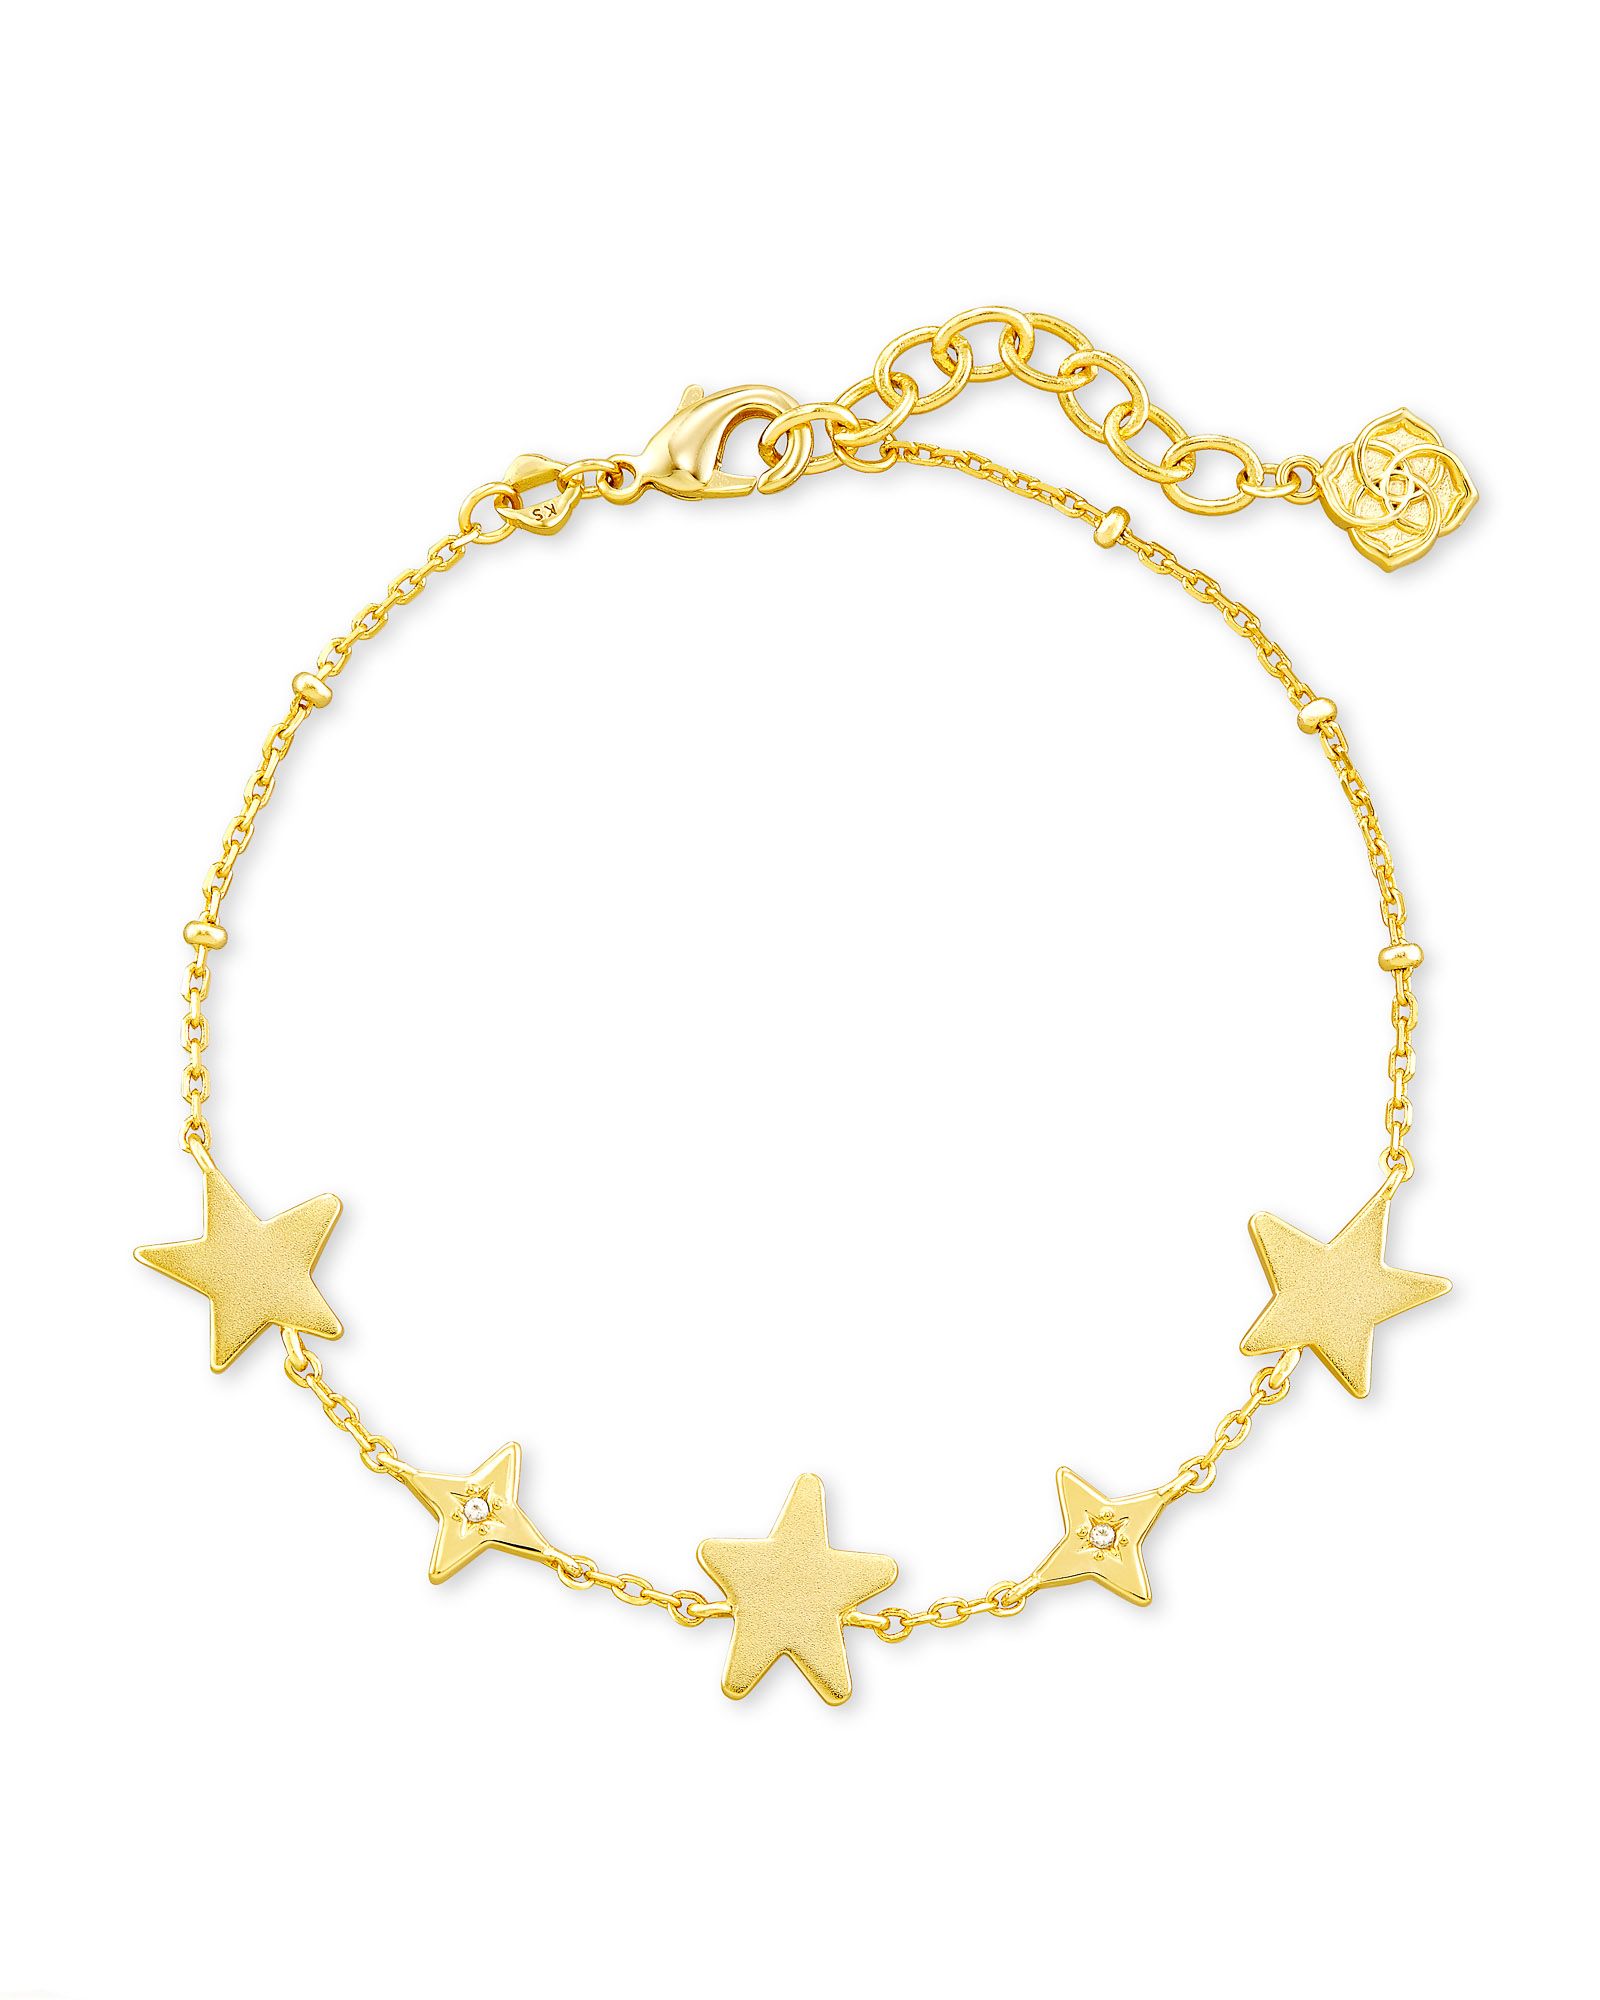 Jae Star Delicate Chain Bracelet in Gold | Kendra Scott